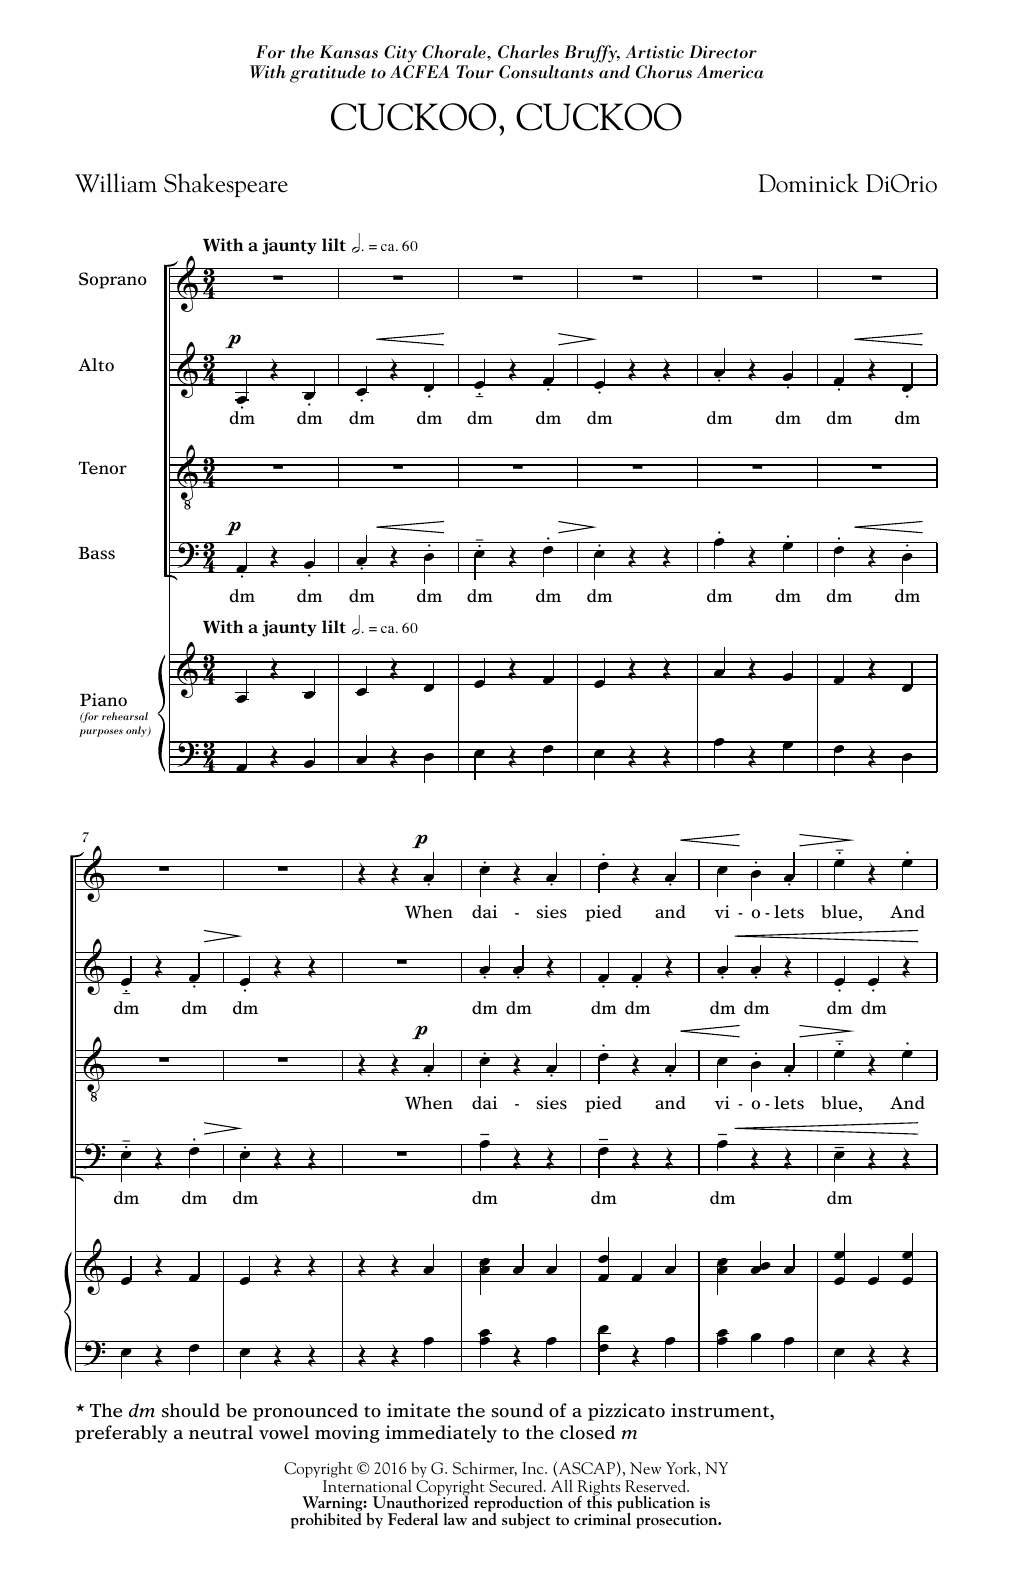 Dominick DiOrio Cuckoo Cuckoo sheet music notes and chords arranged for SATB Choir